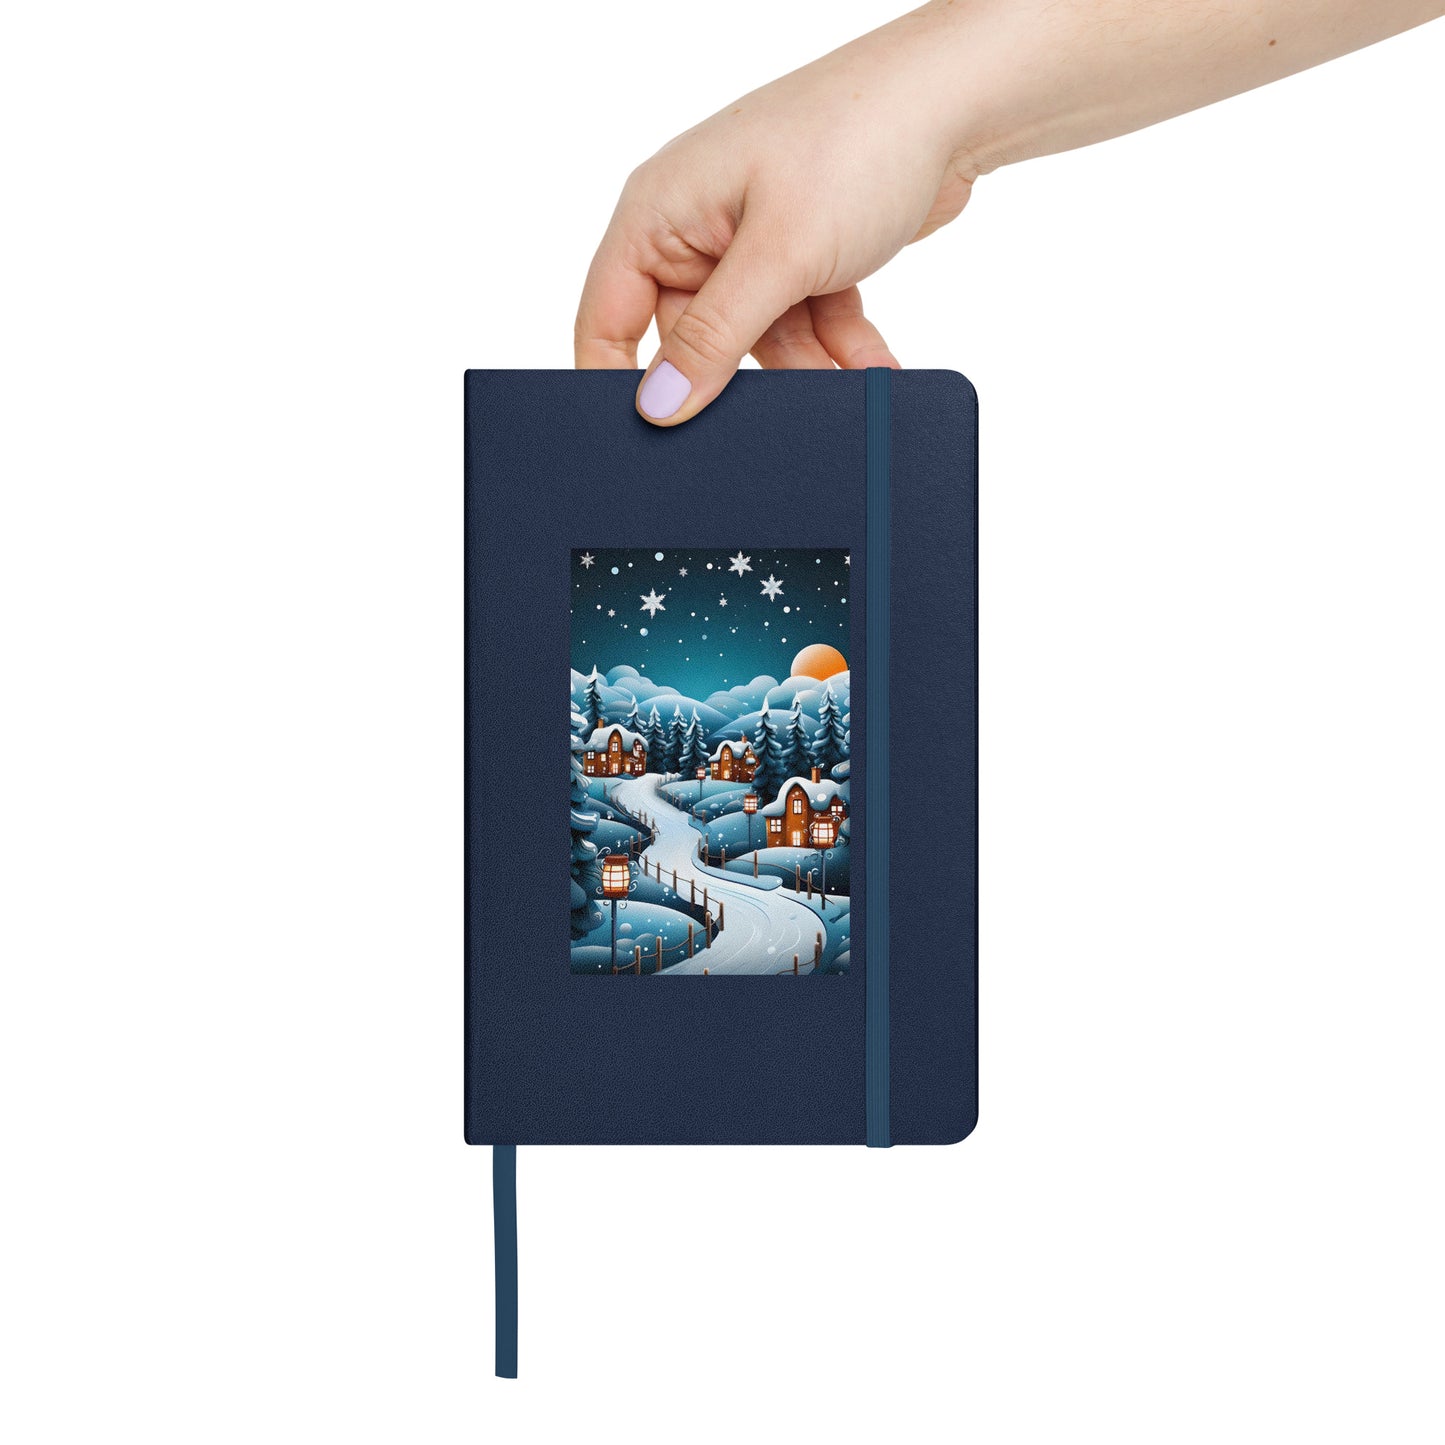 Winter Scene Hardcover Bound Notebook